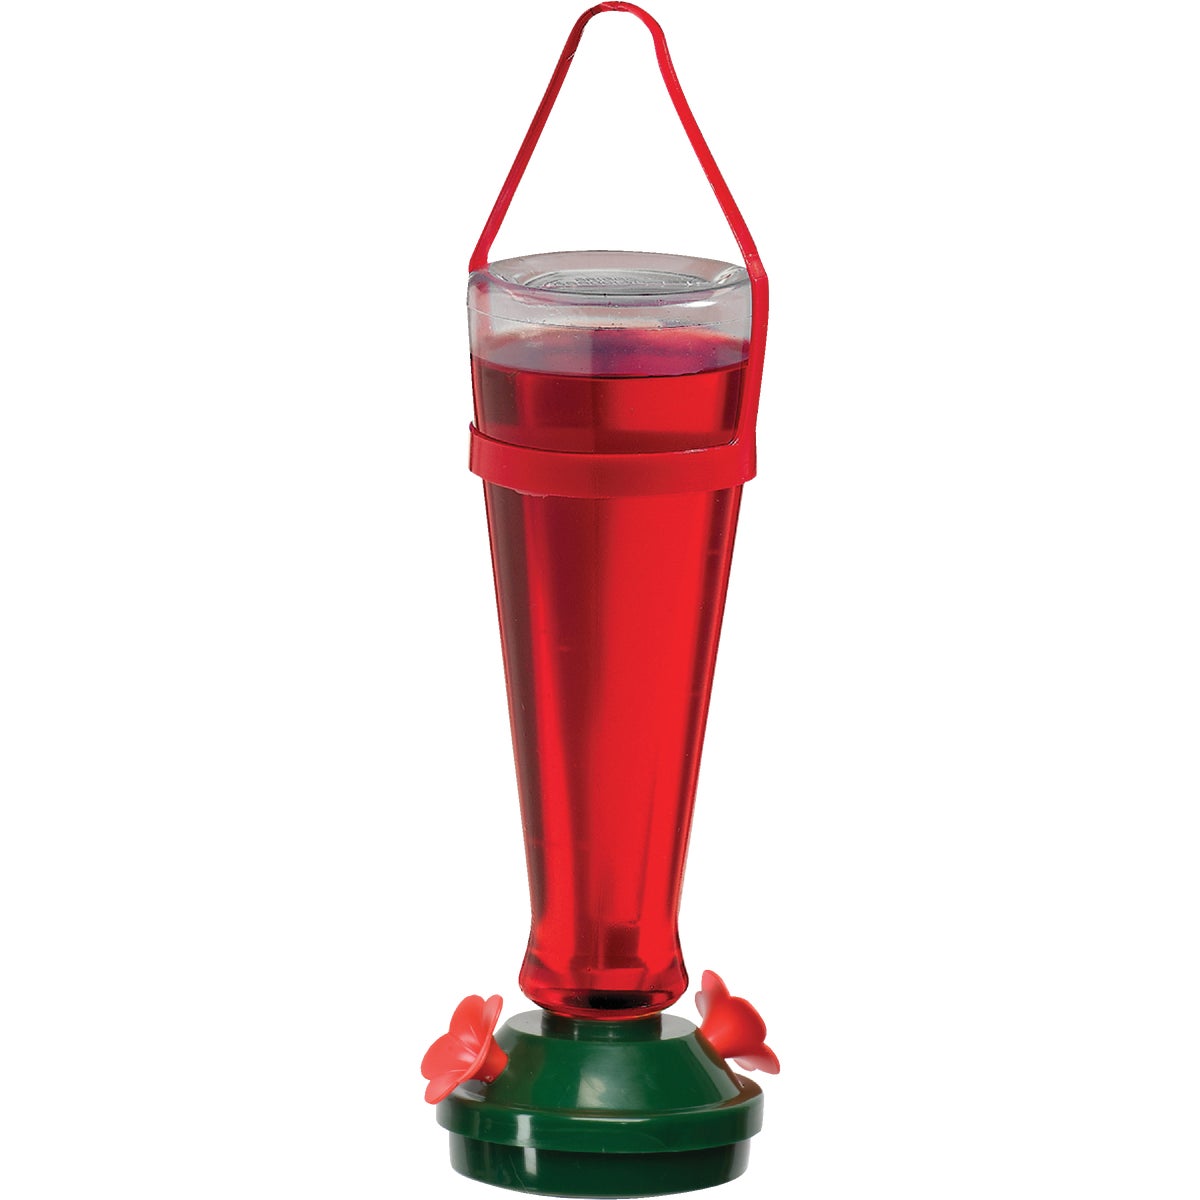 Item 733679, Briggs hummingbird feeder. Plastic reservoir and base.